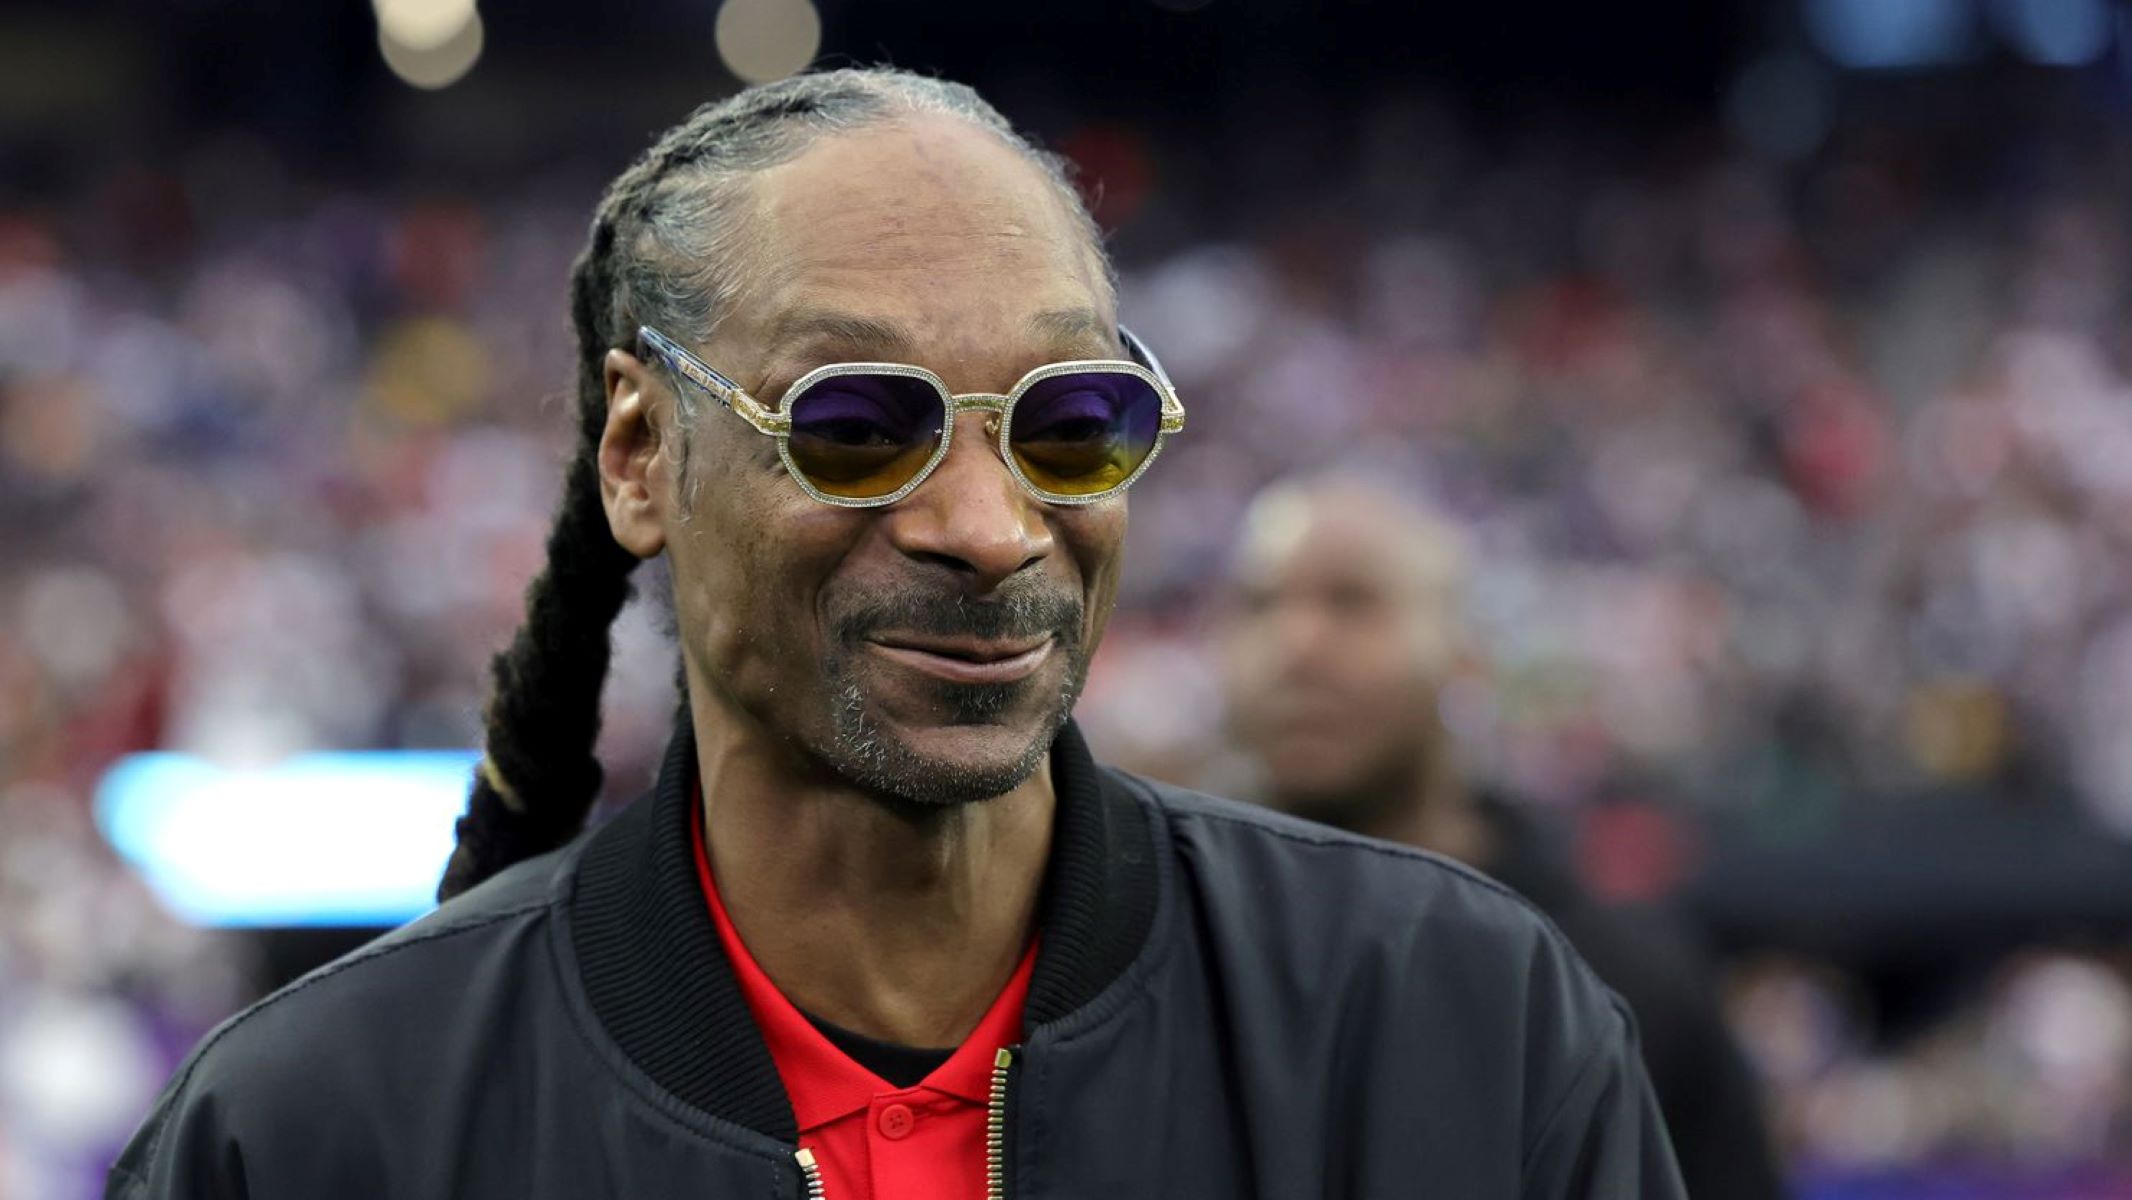 Snoop Dogg's Surprising Religious Beliefs Revealed!